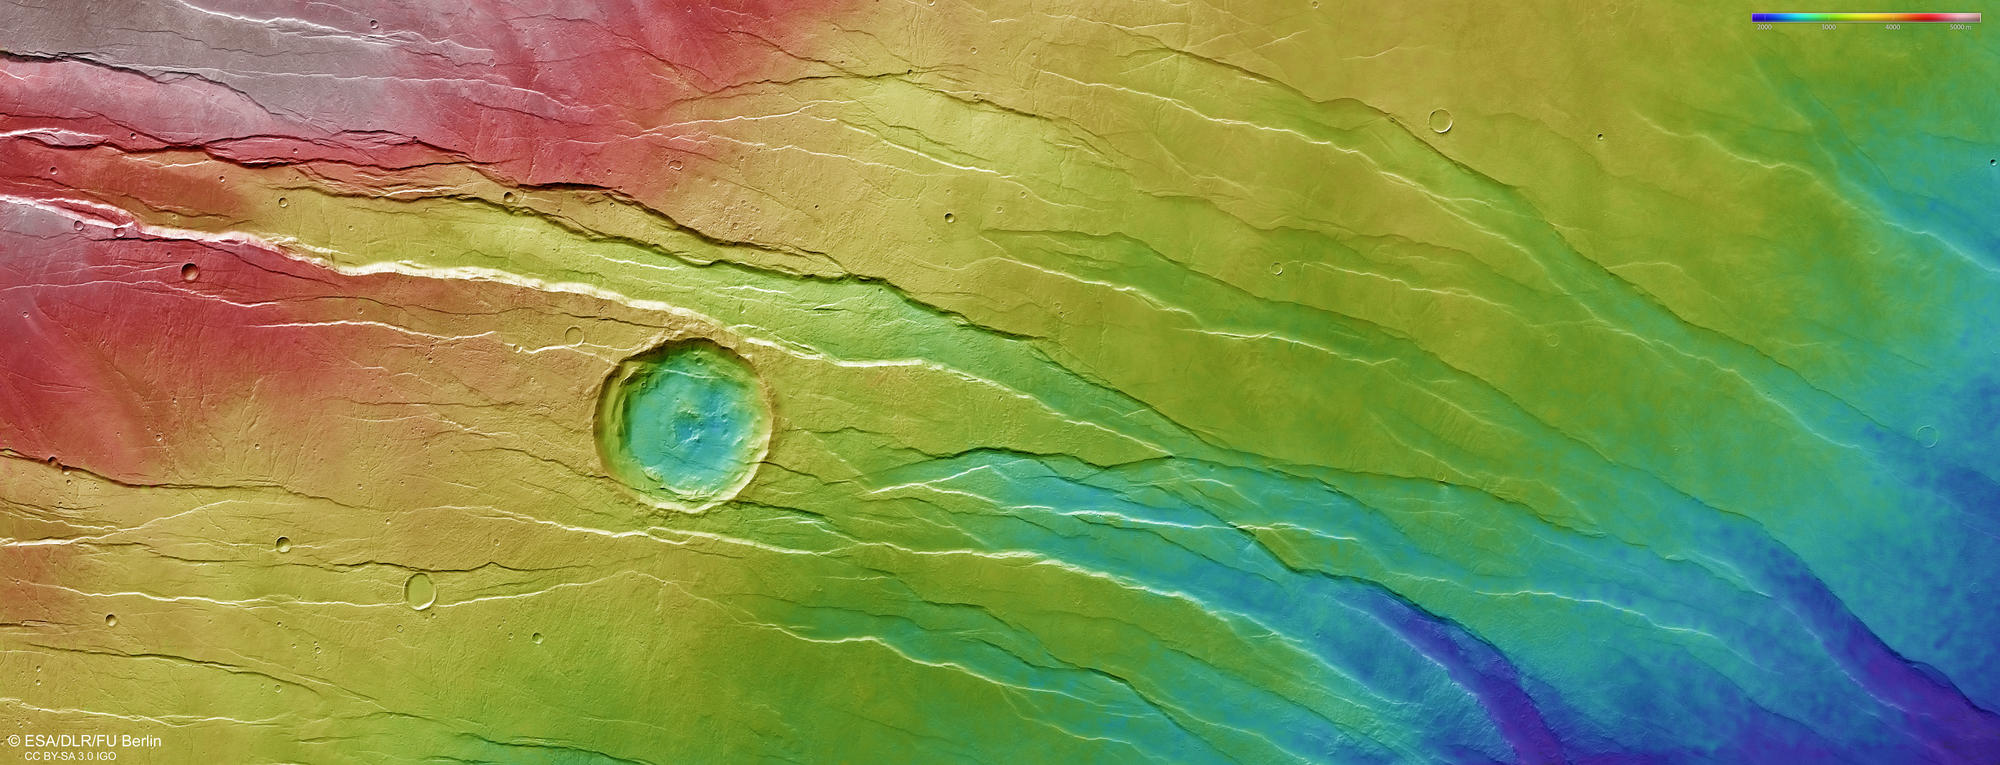 Tantalus Fossae color-coded terrain model